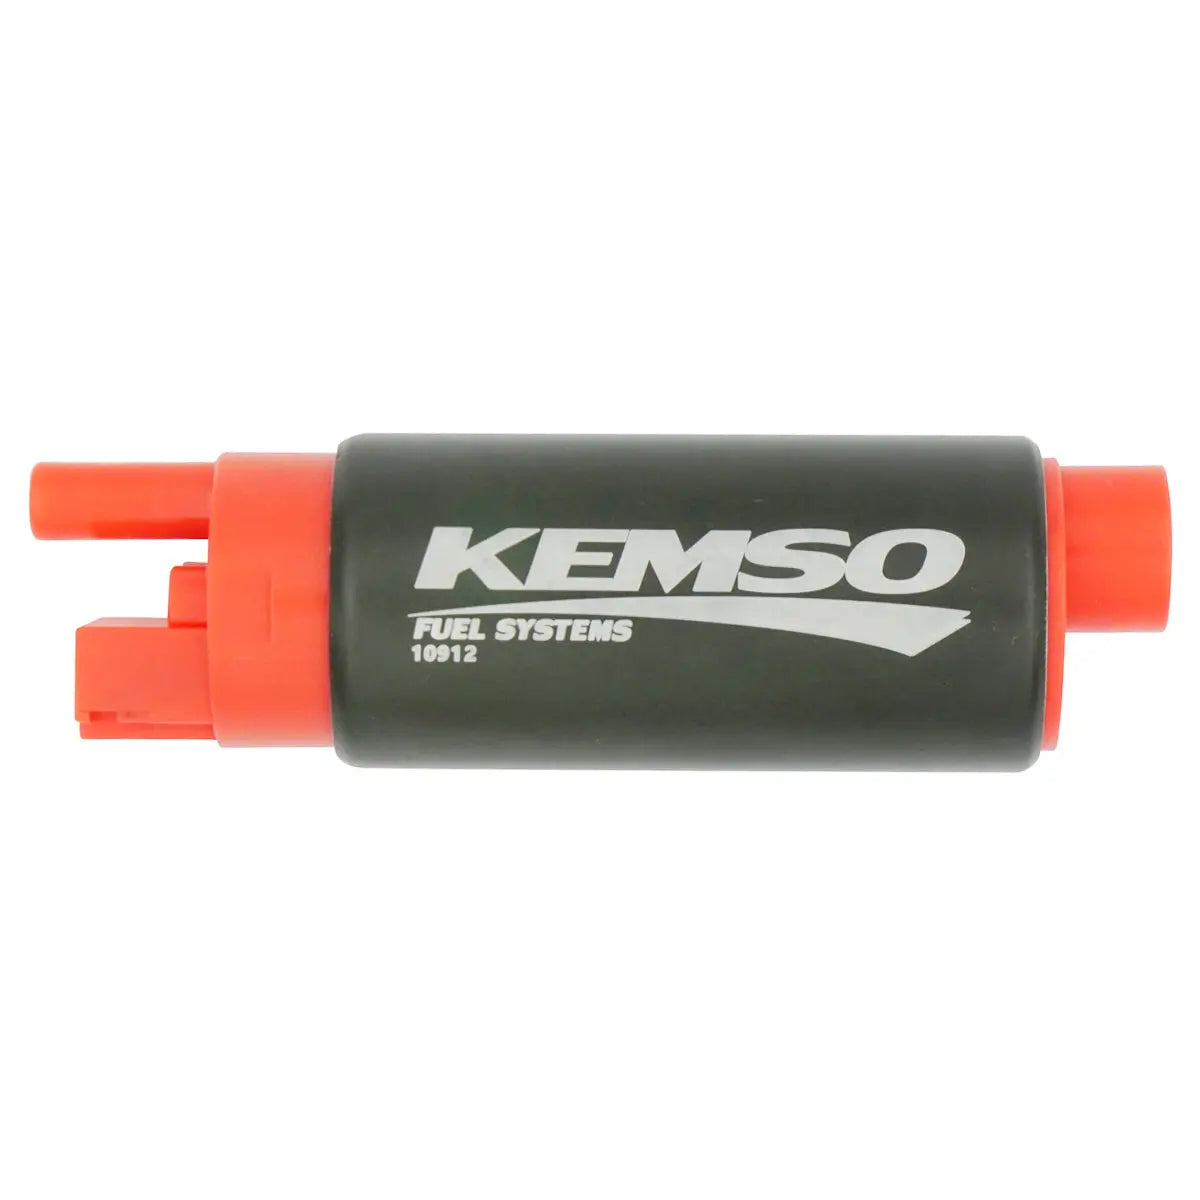 KEMSO 340LPH High Performance Fuel Pump for Chevrolet K2500 Suburban 4x4 1992-1997 - KEMSO